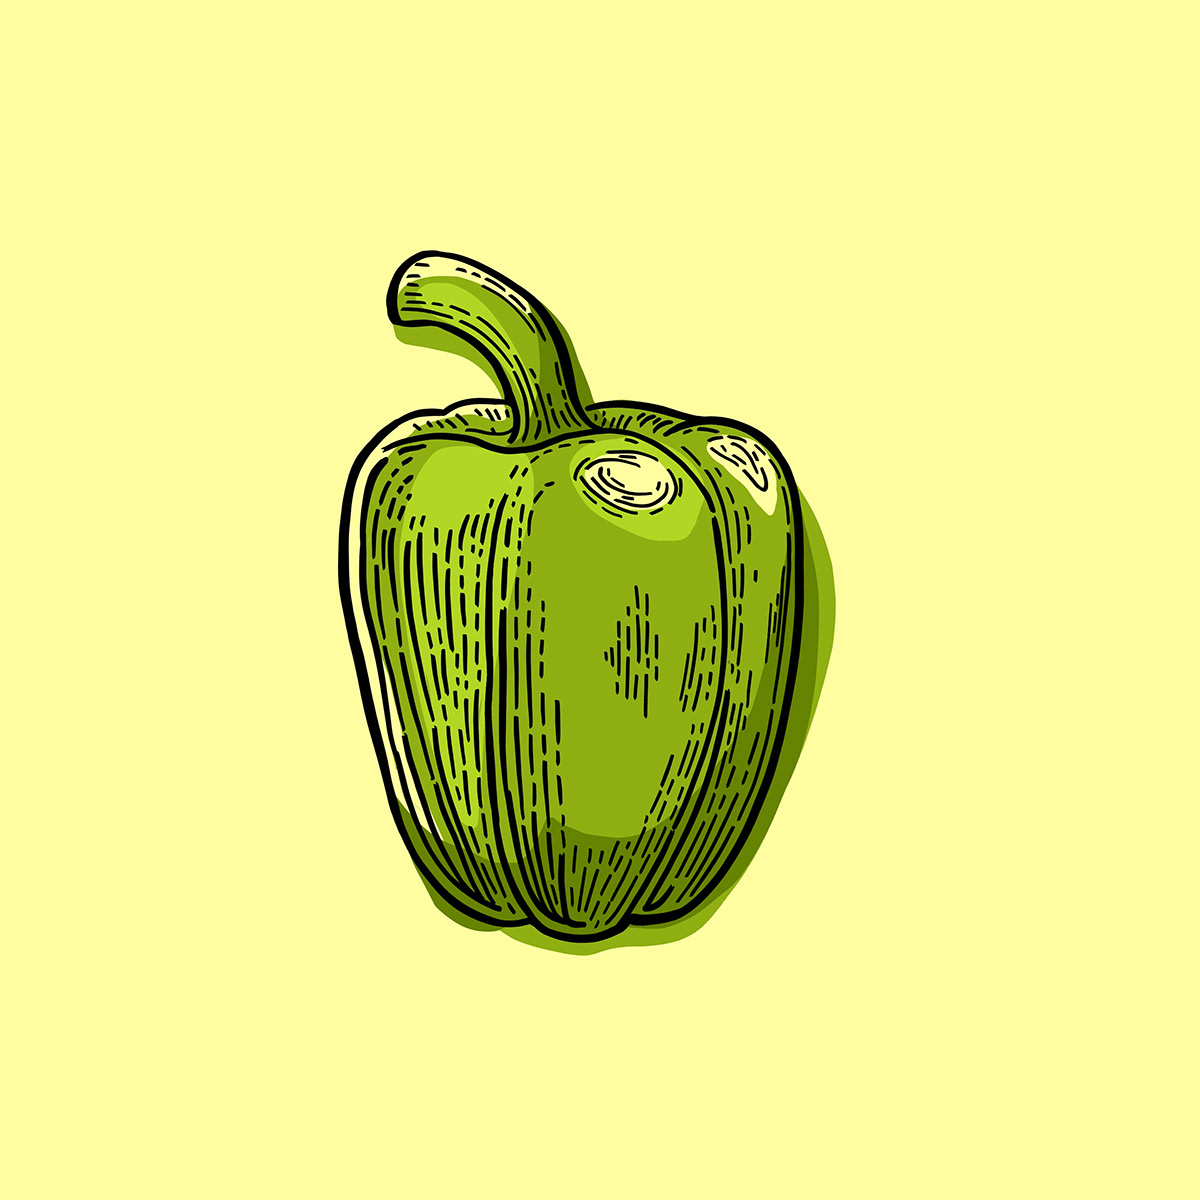 Green pepper illustration in a linocut style 